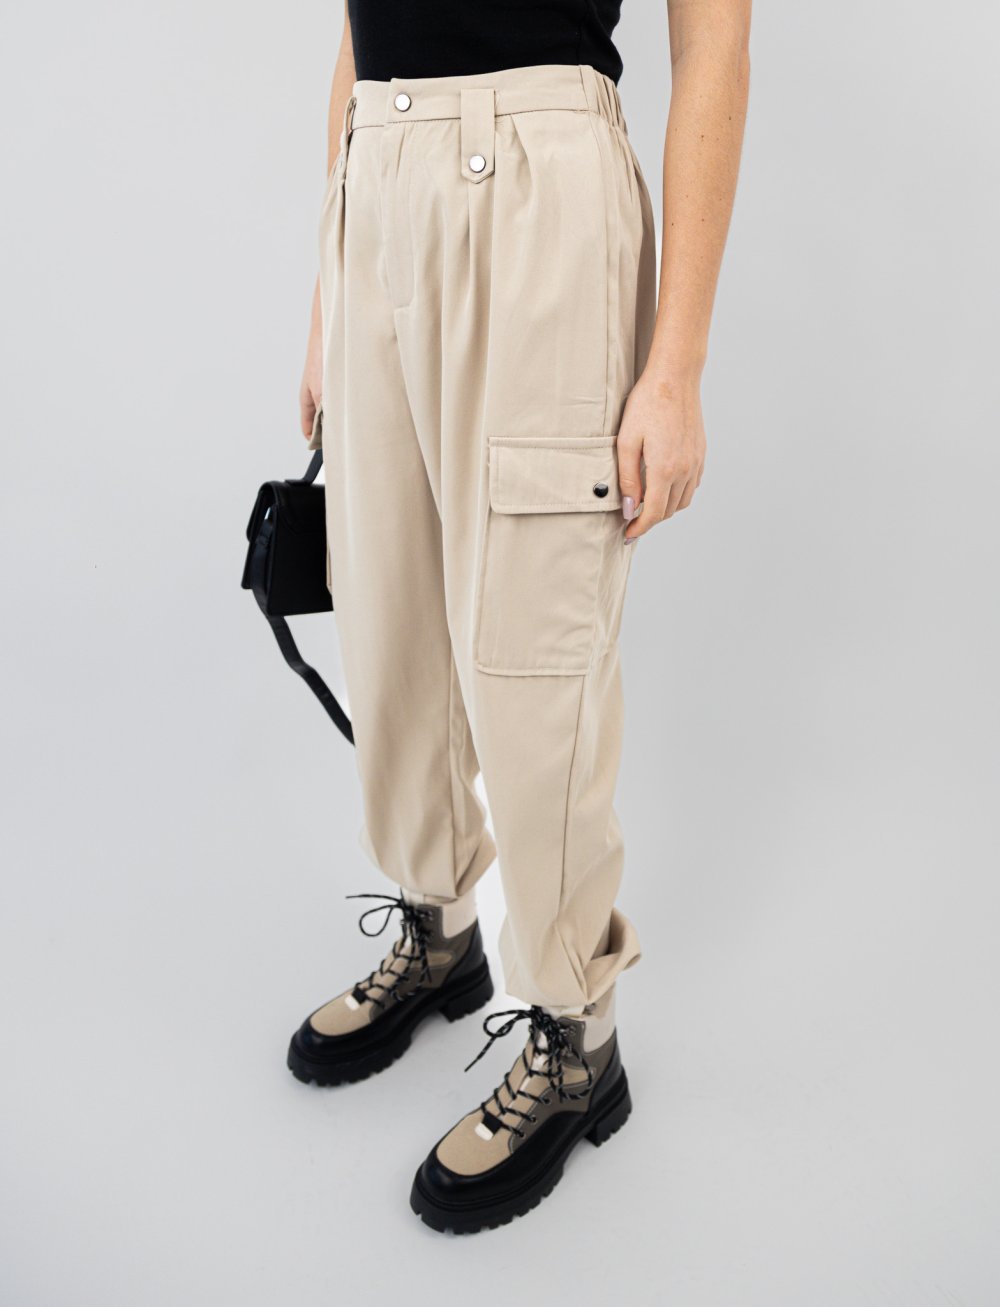 Kalhoty jednobarevné s kapsami 18001